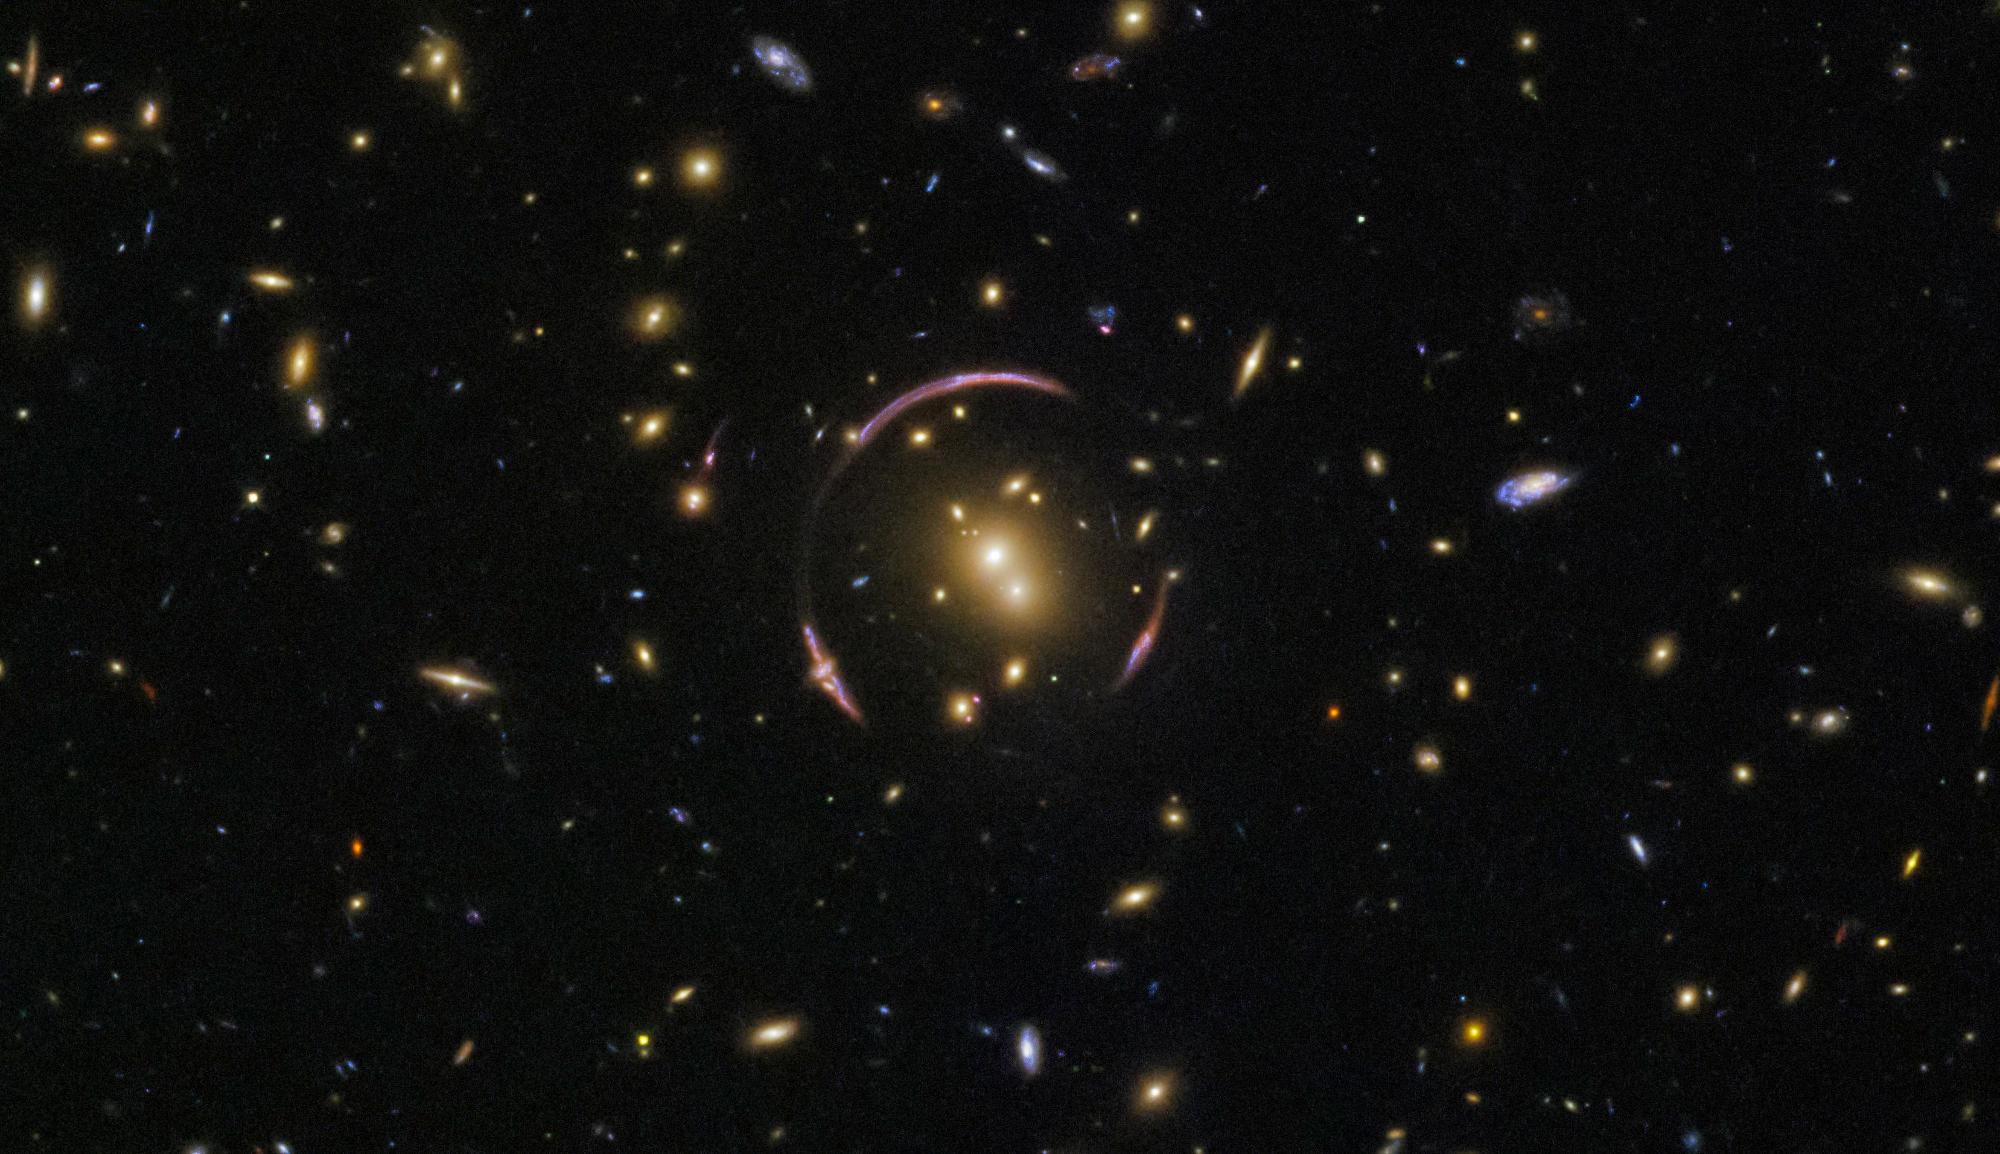 Credit: ESA/Hubble & NASA